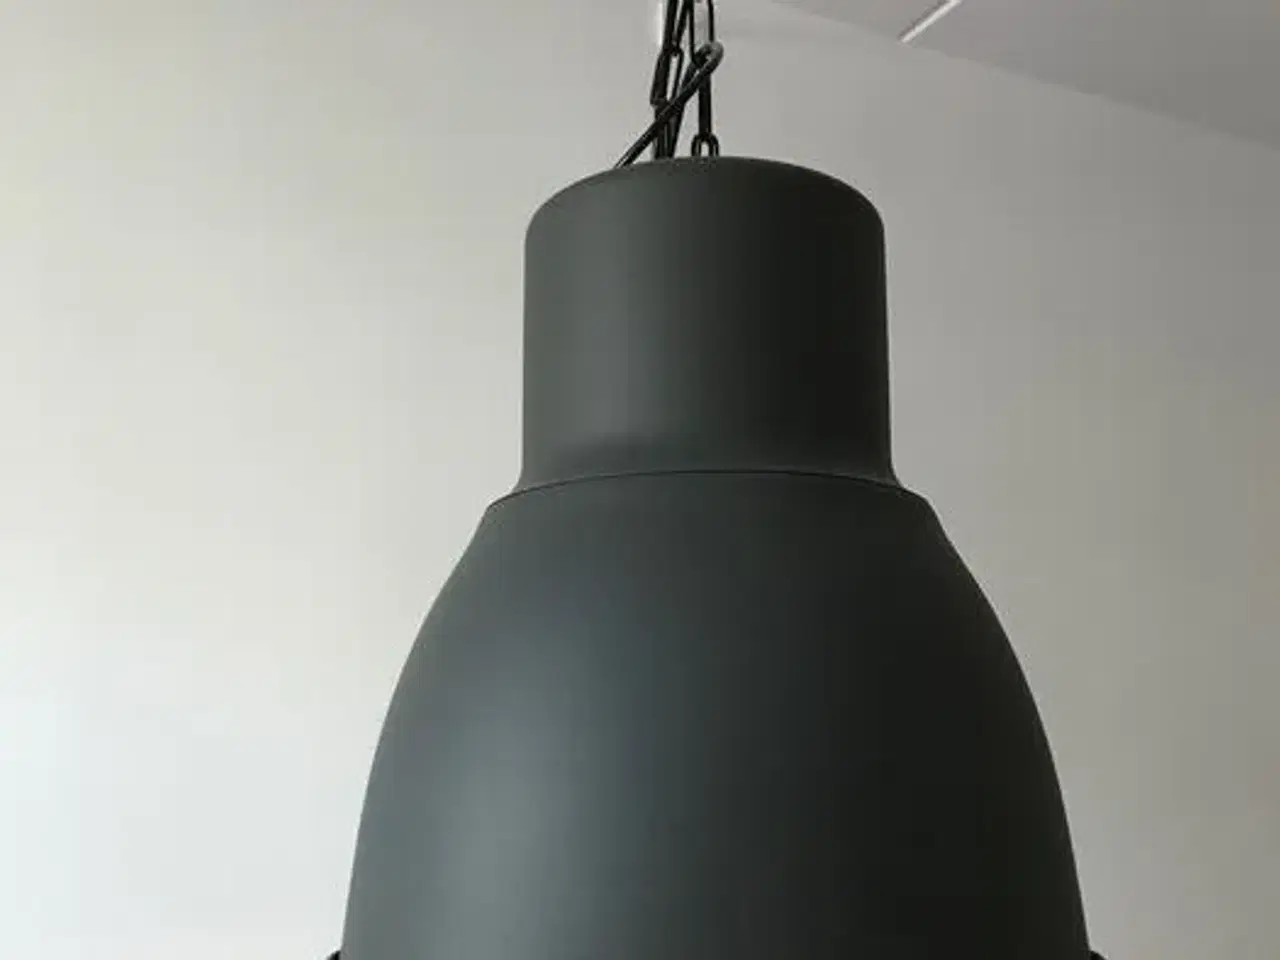 Billede 2 - Loftslampe - HEKTAR fra Ikea inkl. pære - 38cm